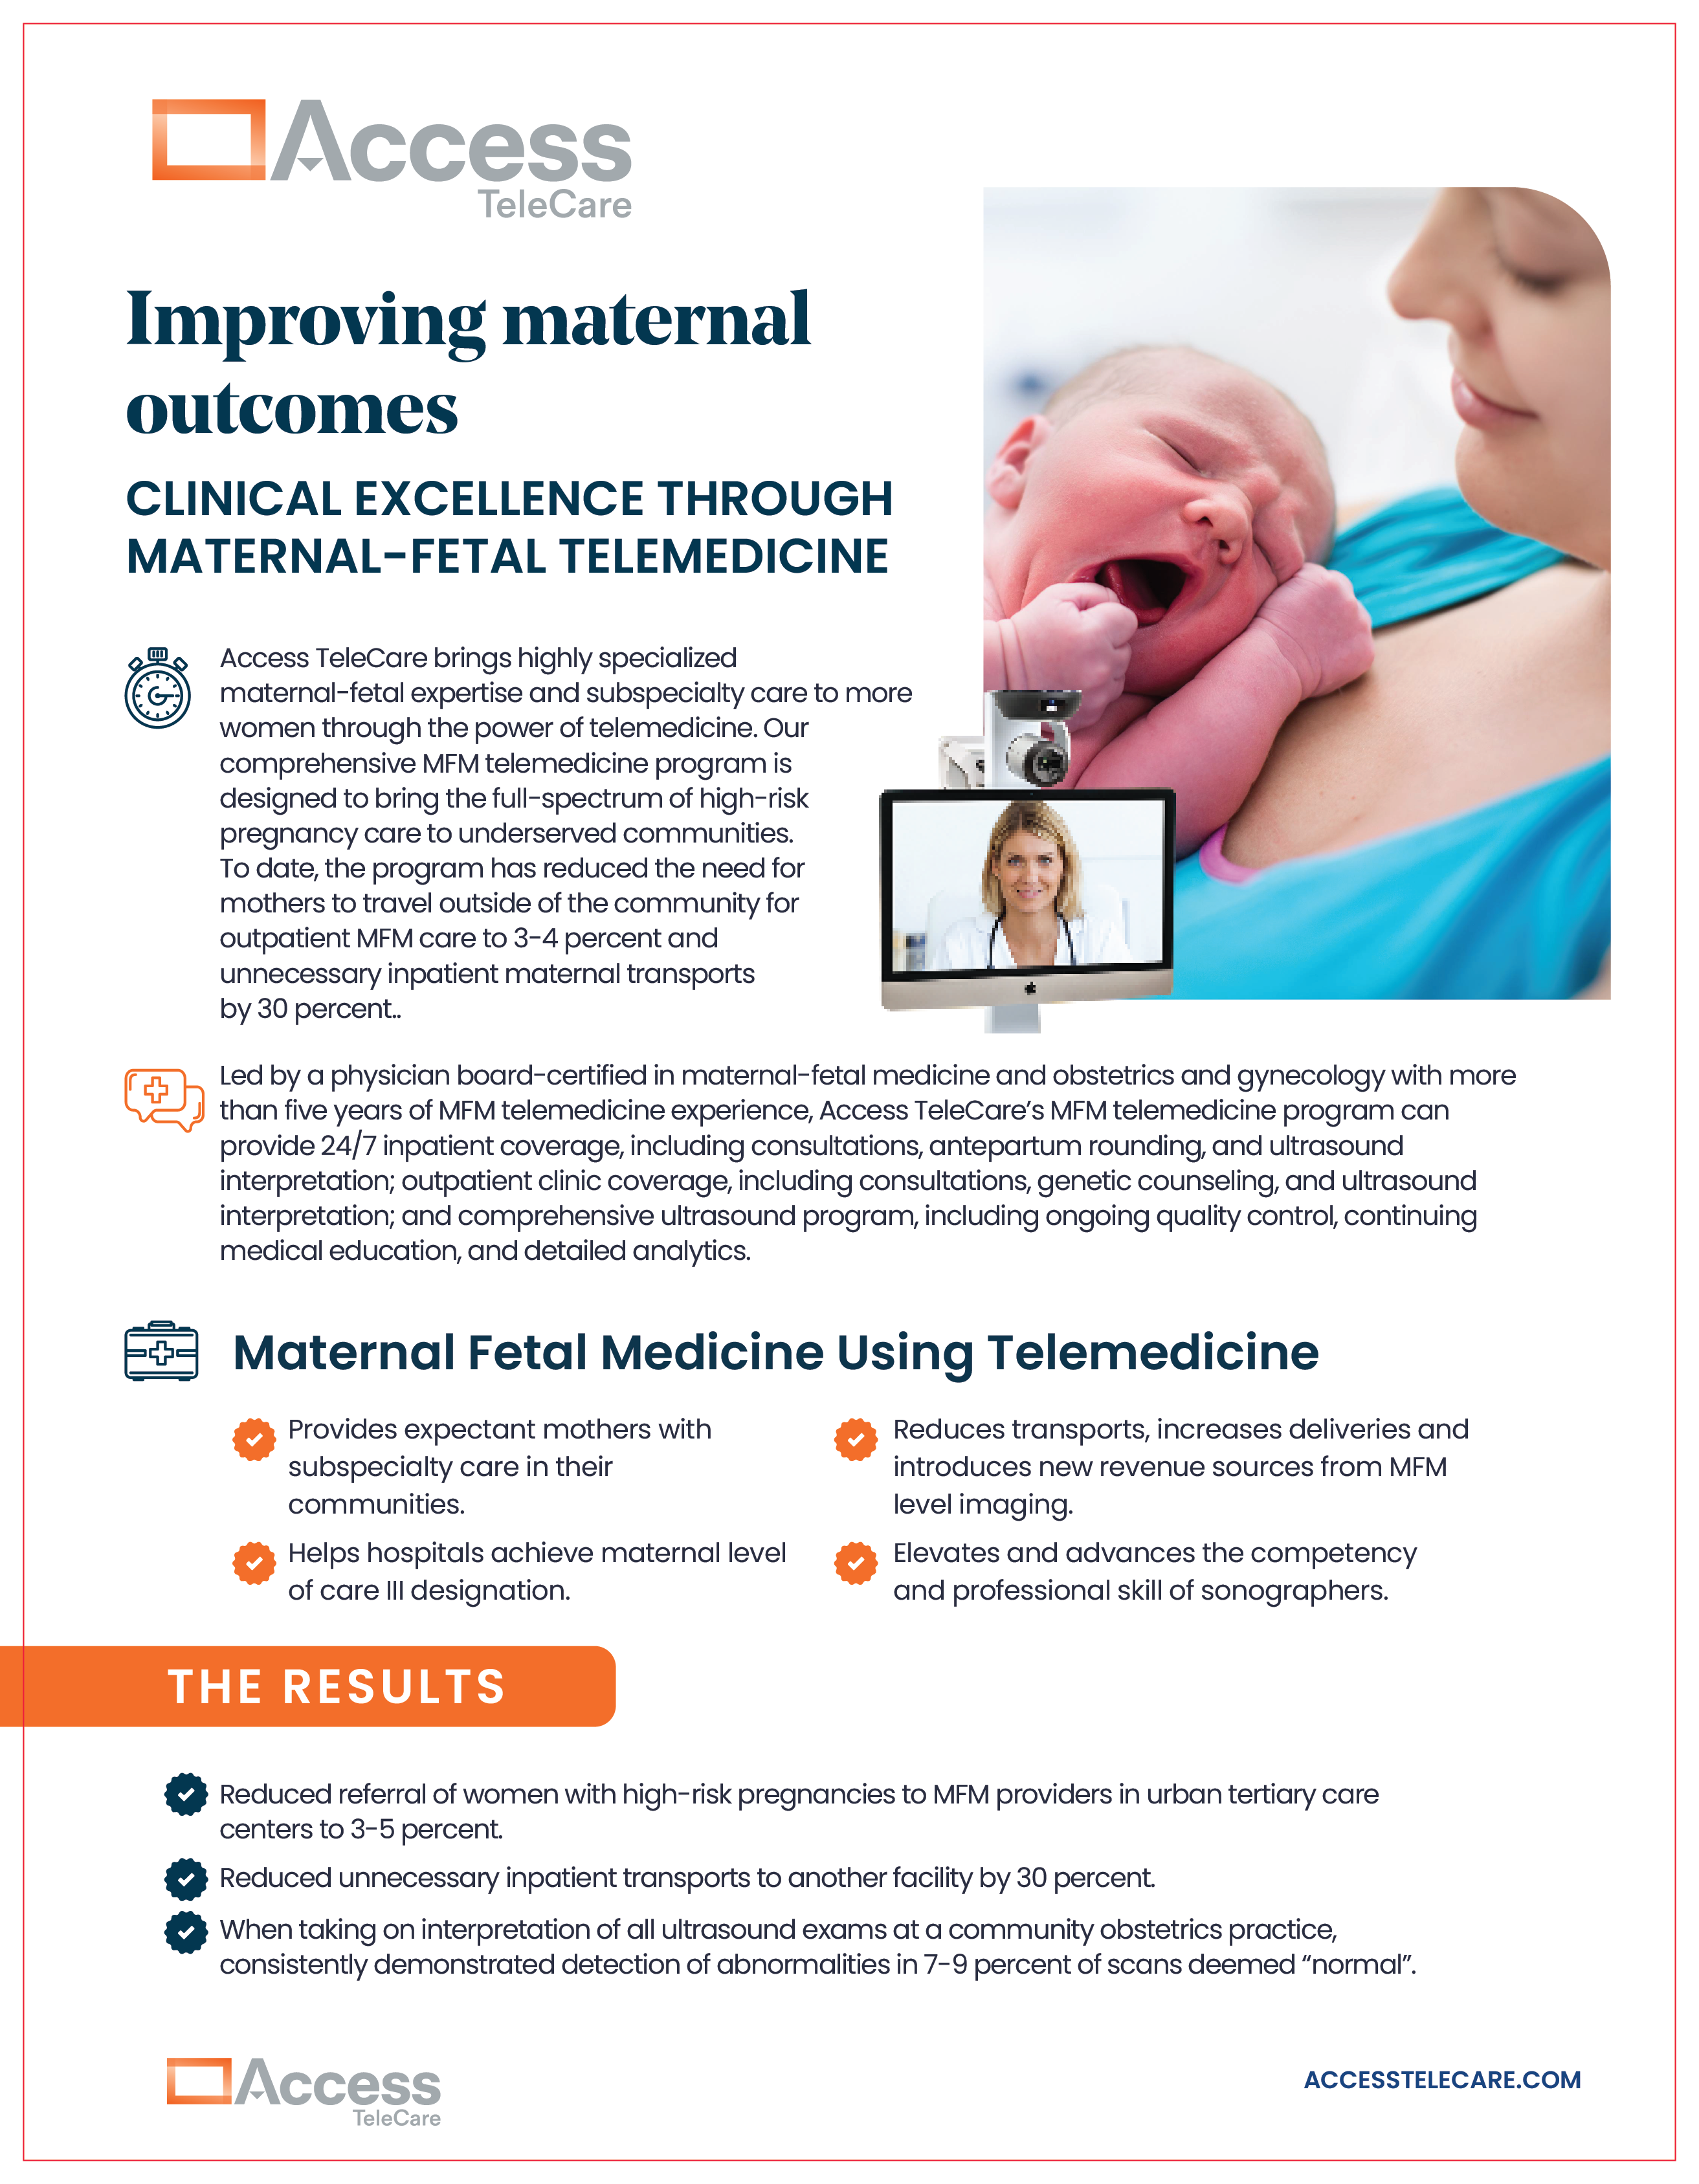 Telematernal-fetal medicine case study. Caring for high-risk pregnancies close to home. Laredo, Texas